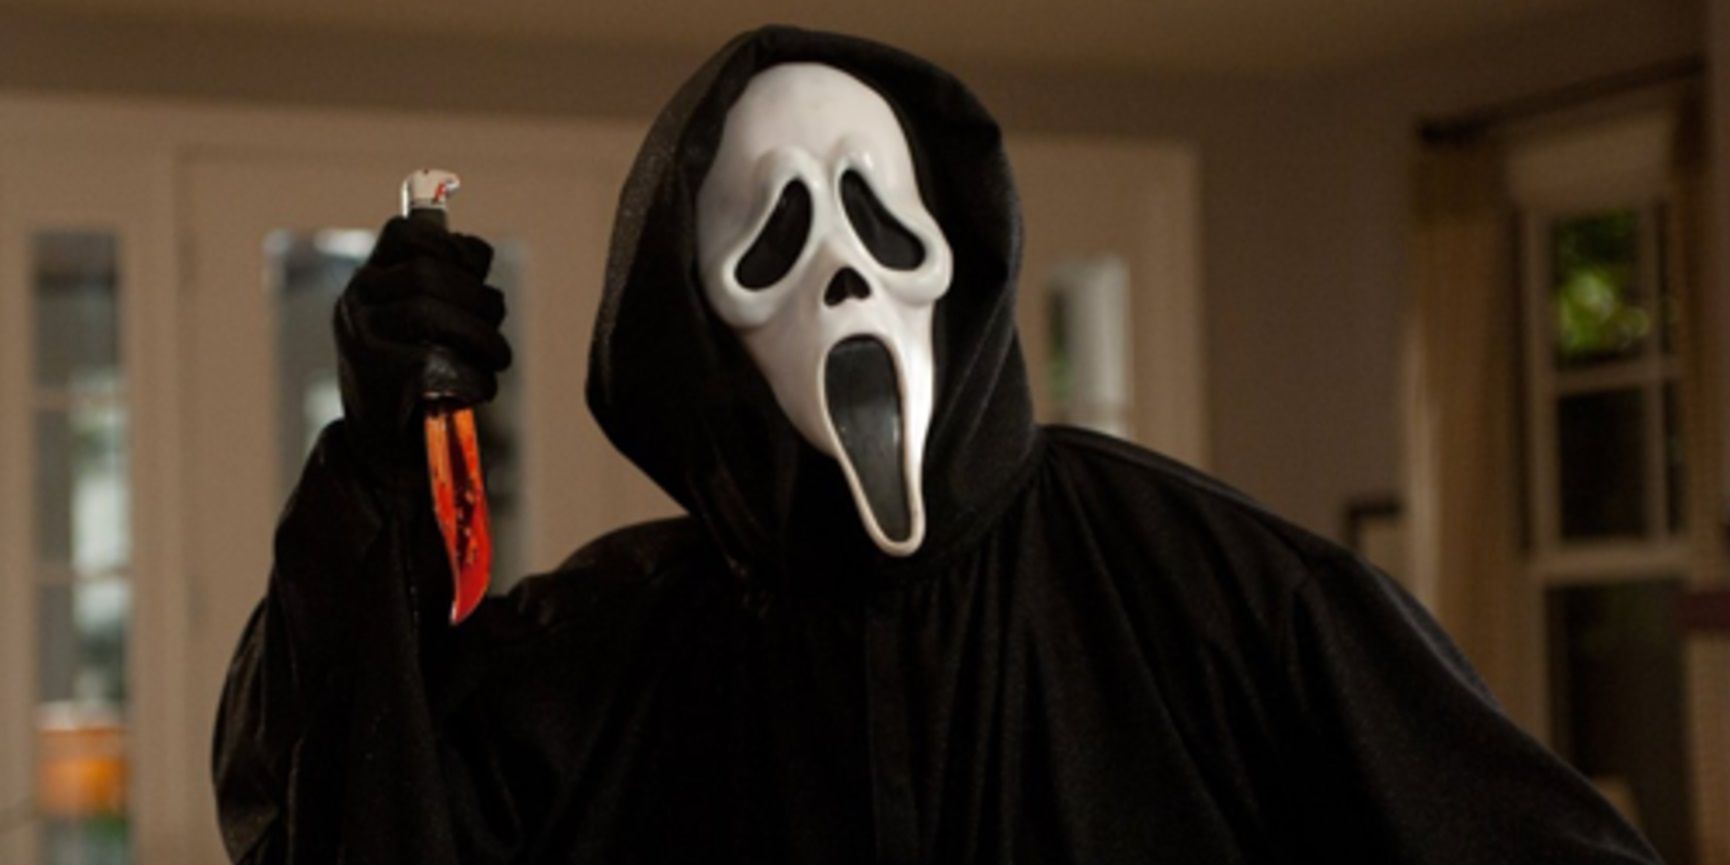 The Ghostface killer in Scream